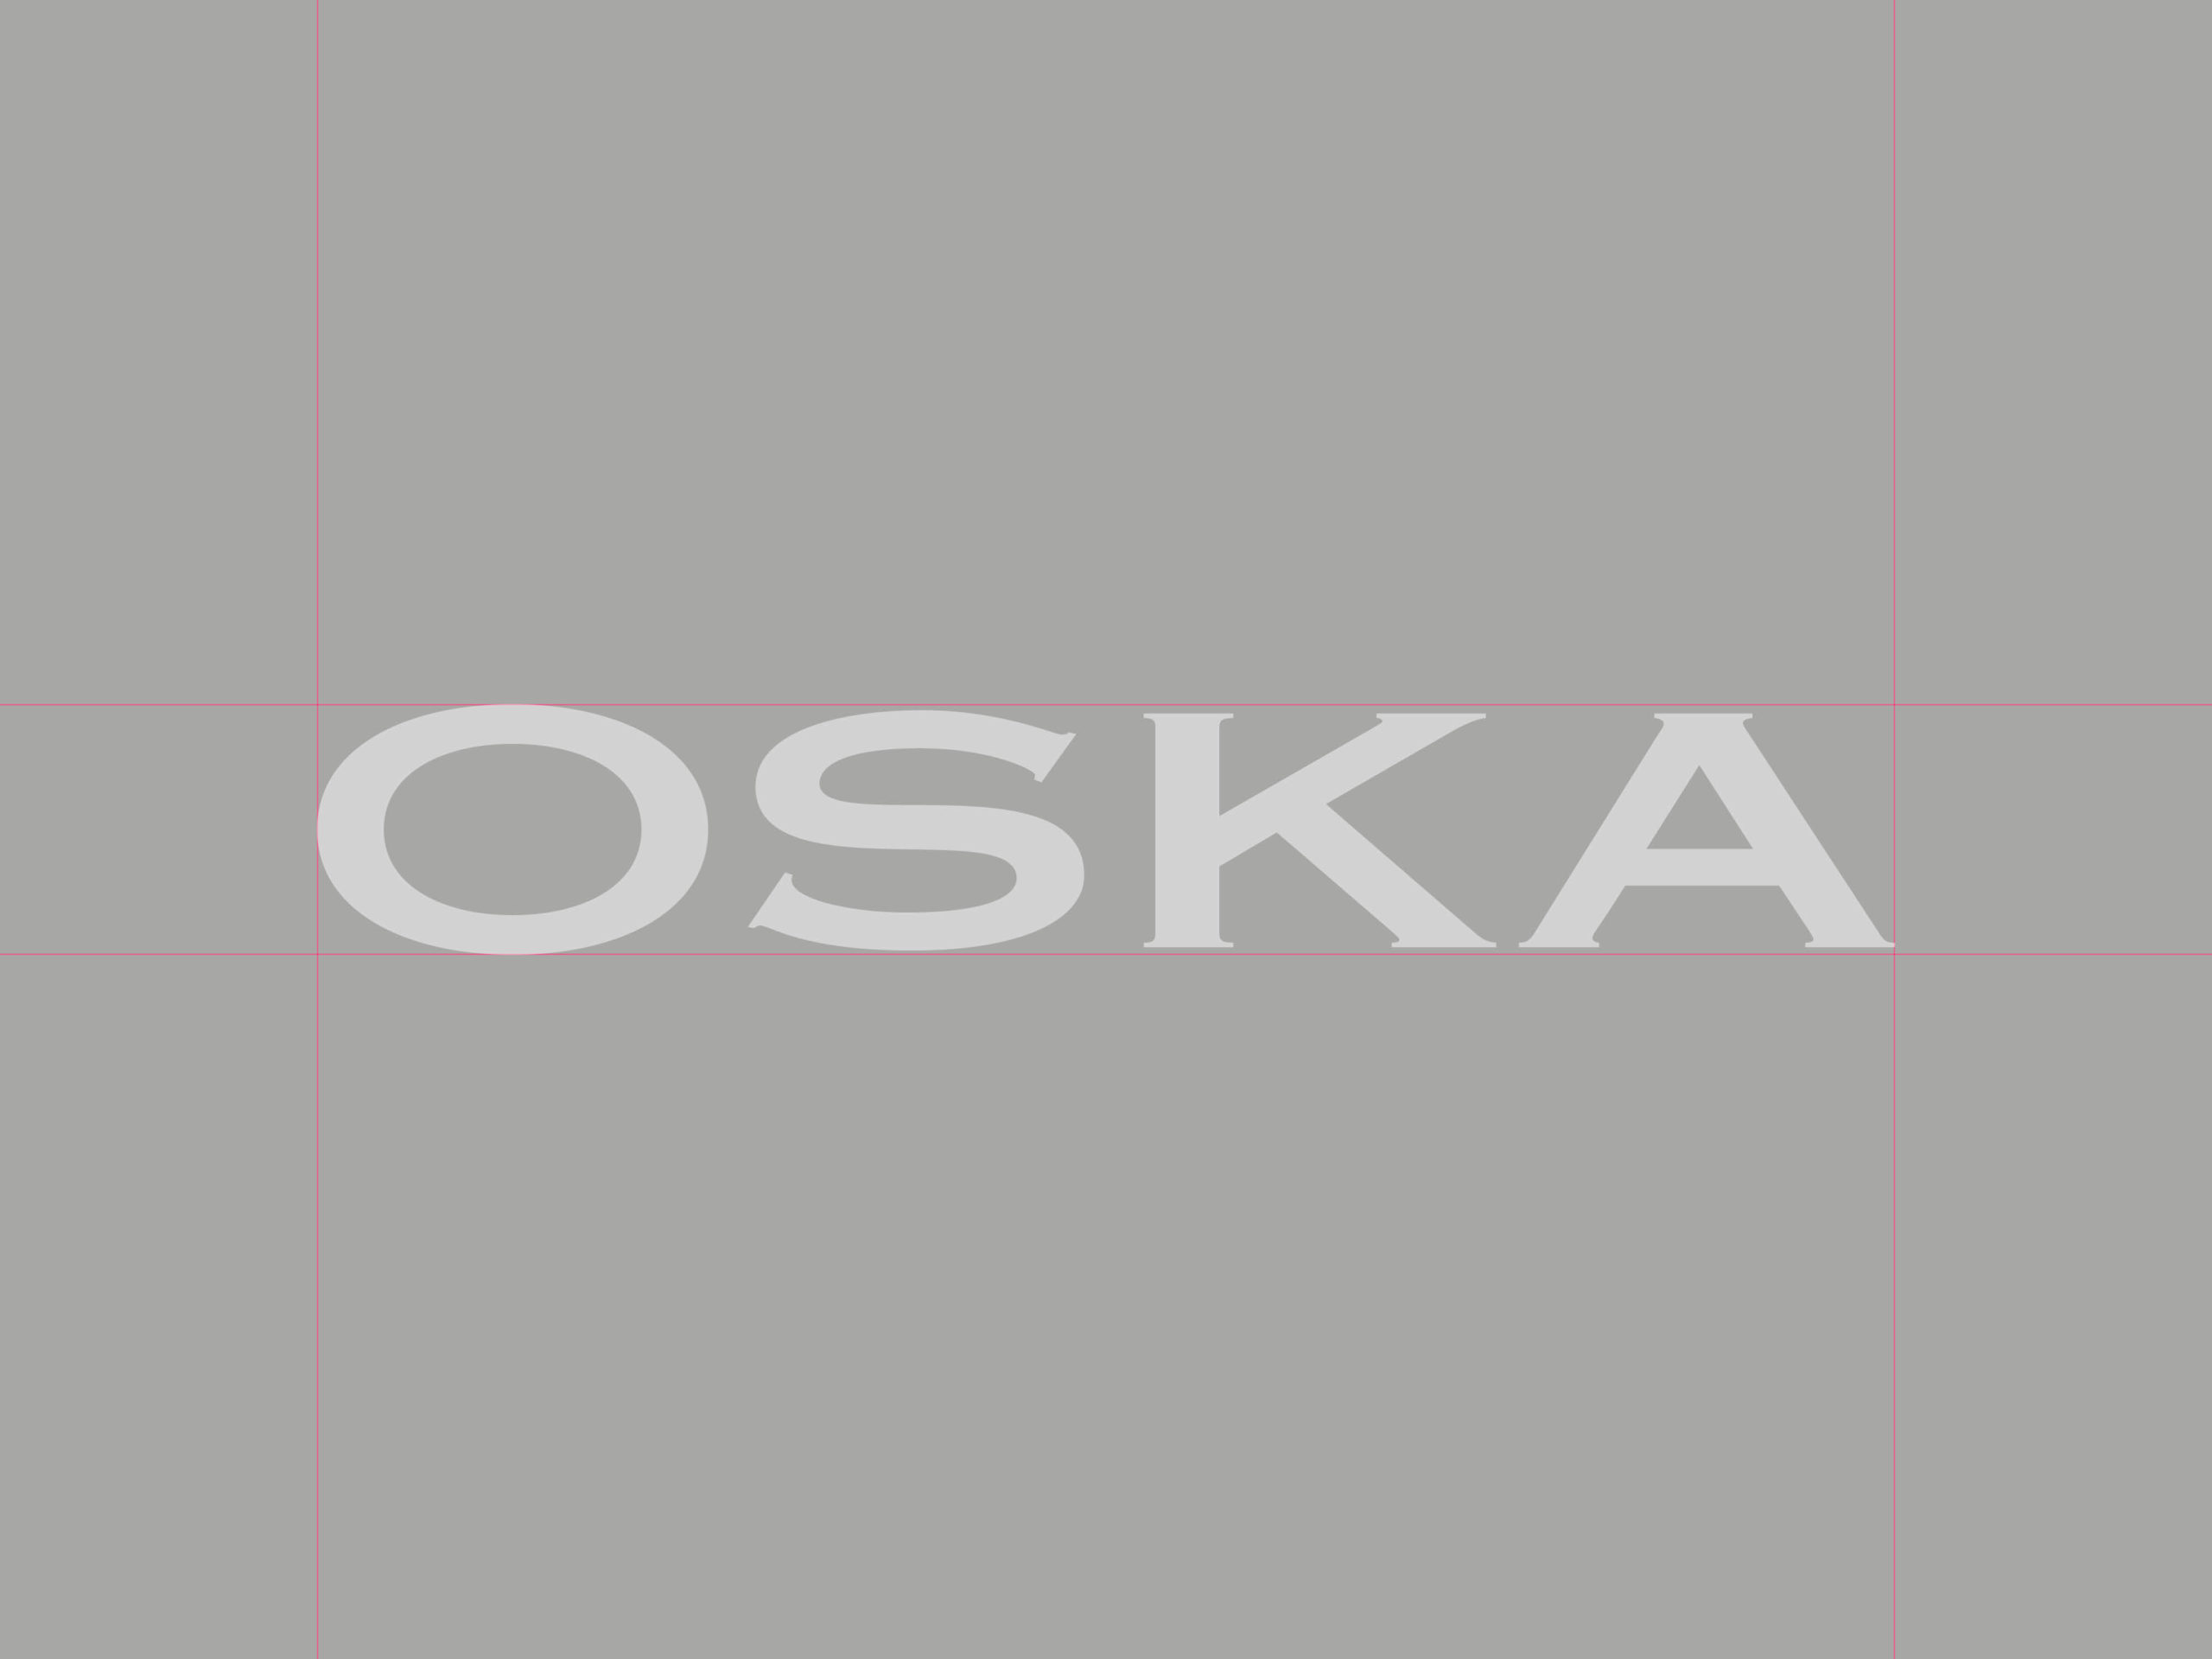 OSKA_13